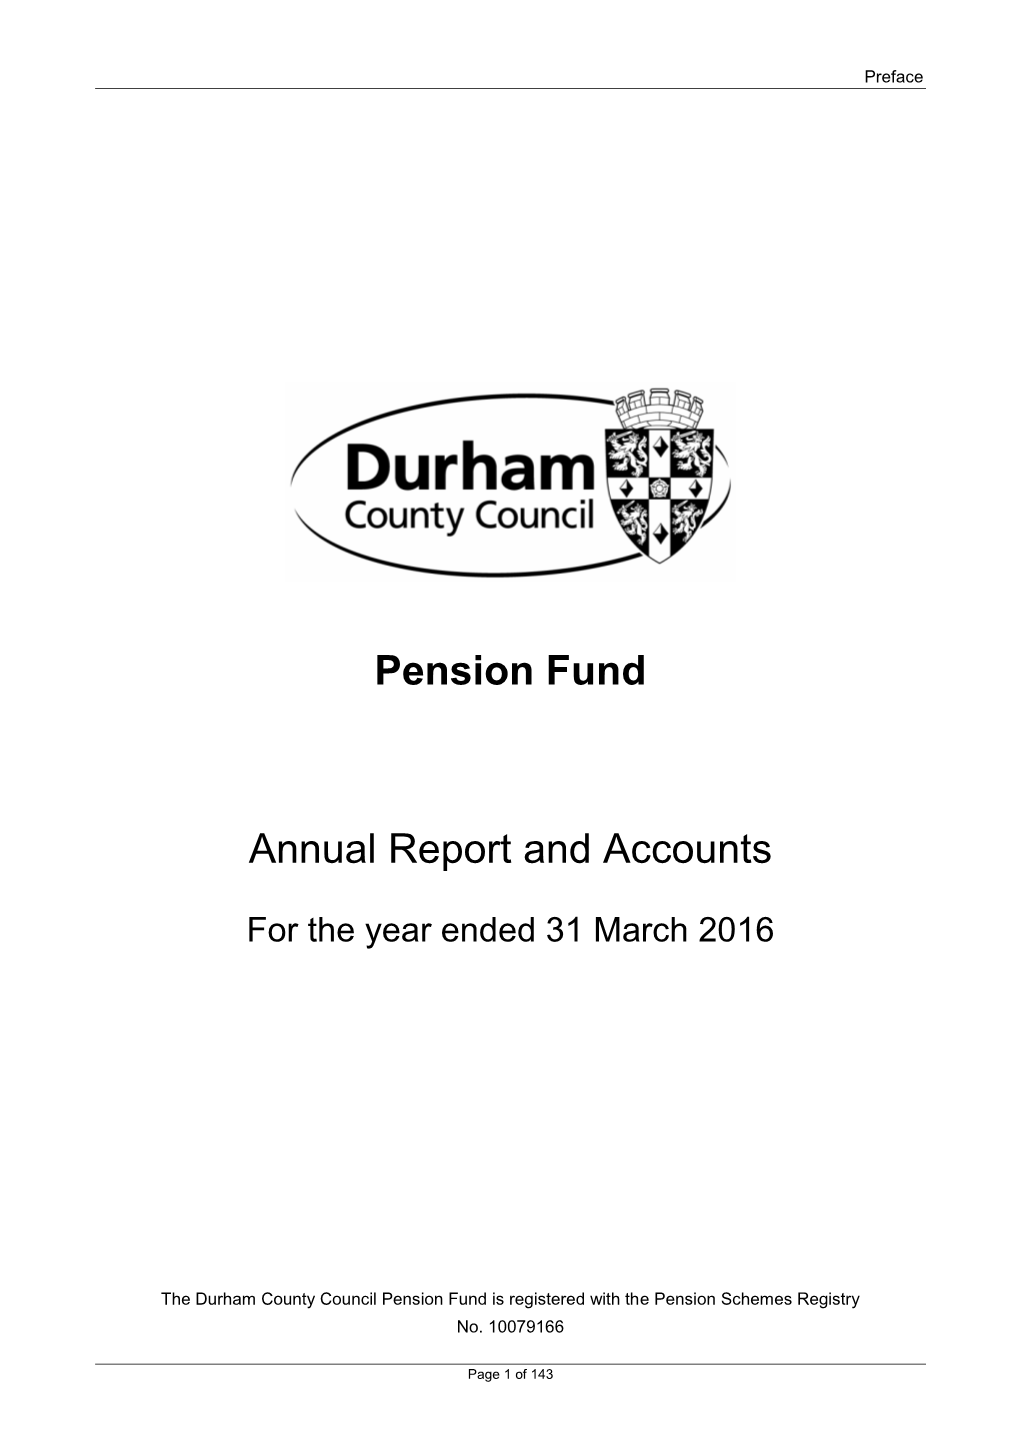 Pension Fund Annual Report 2015/2016